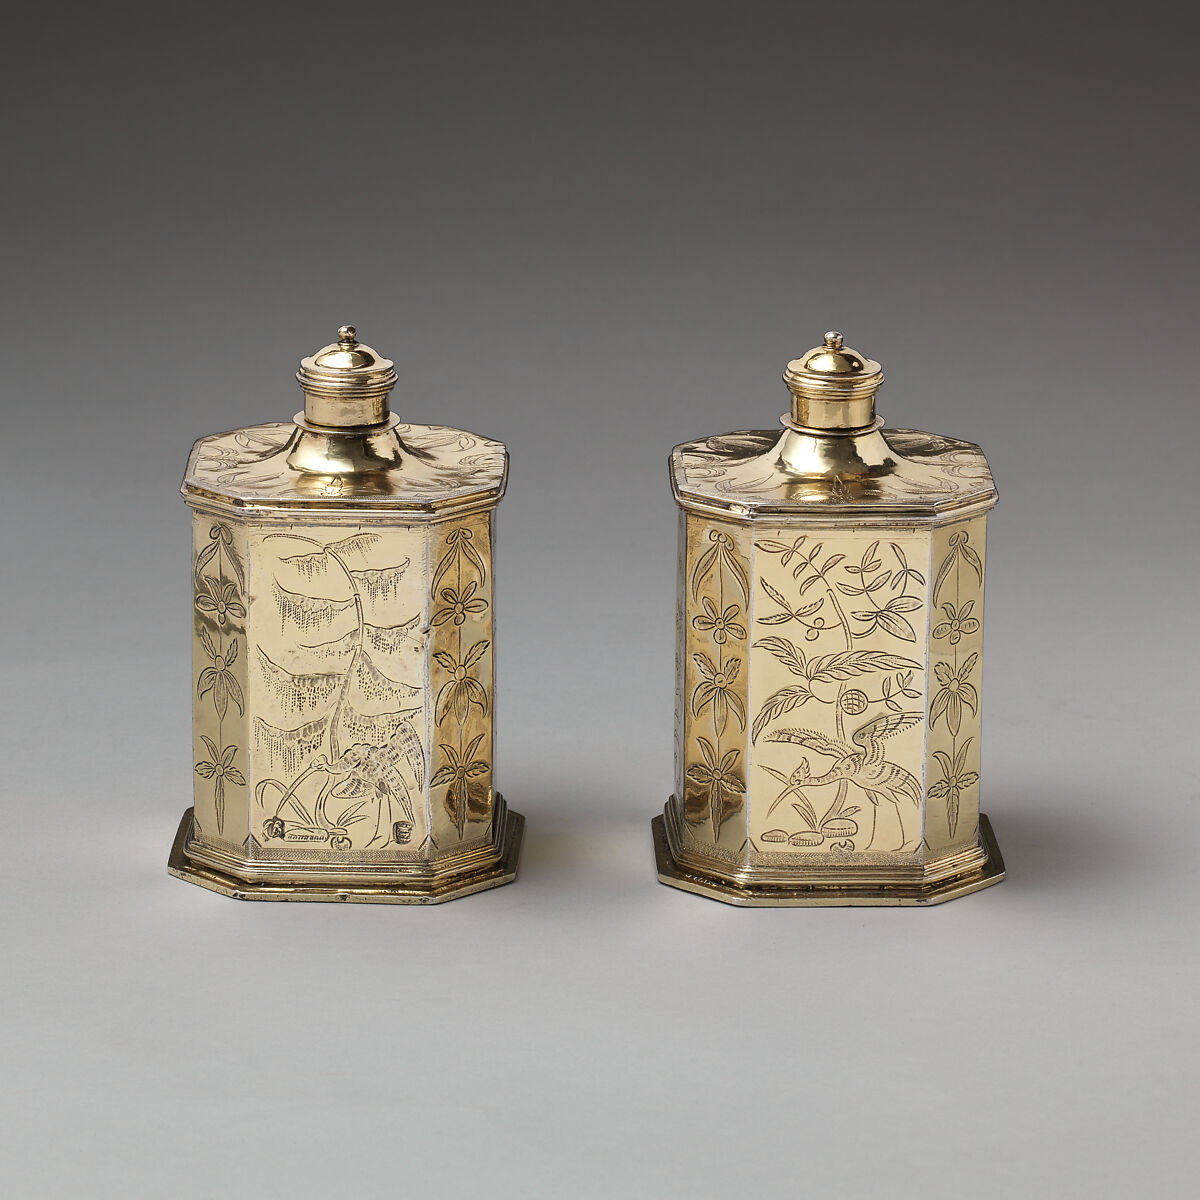 Pair of scent bottles (part of a toilet service), D., London, Silver gilt, British, London